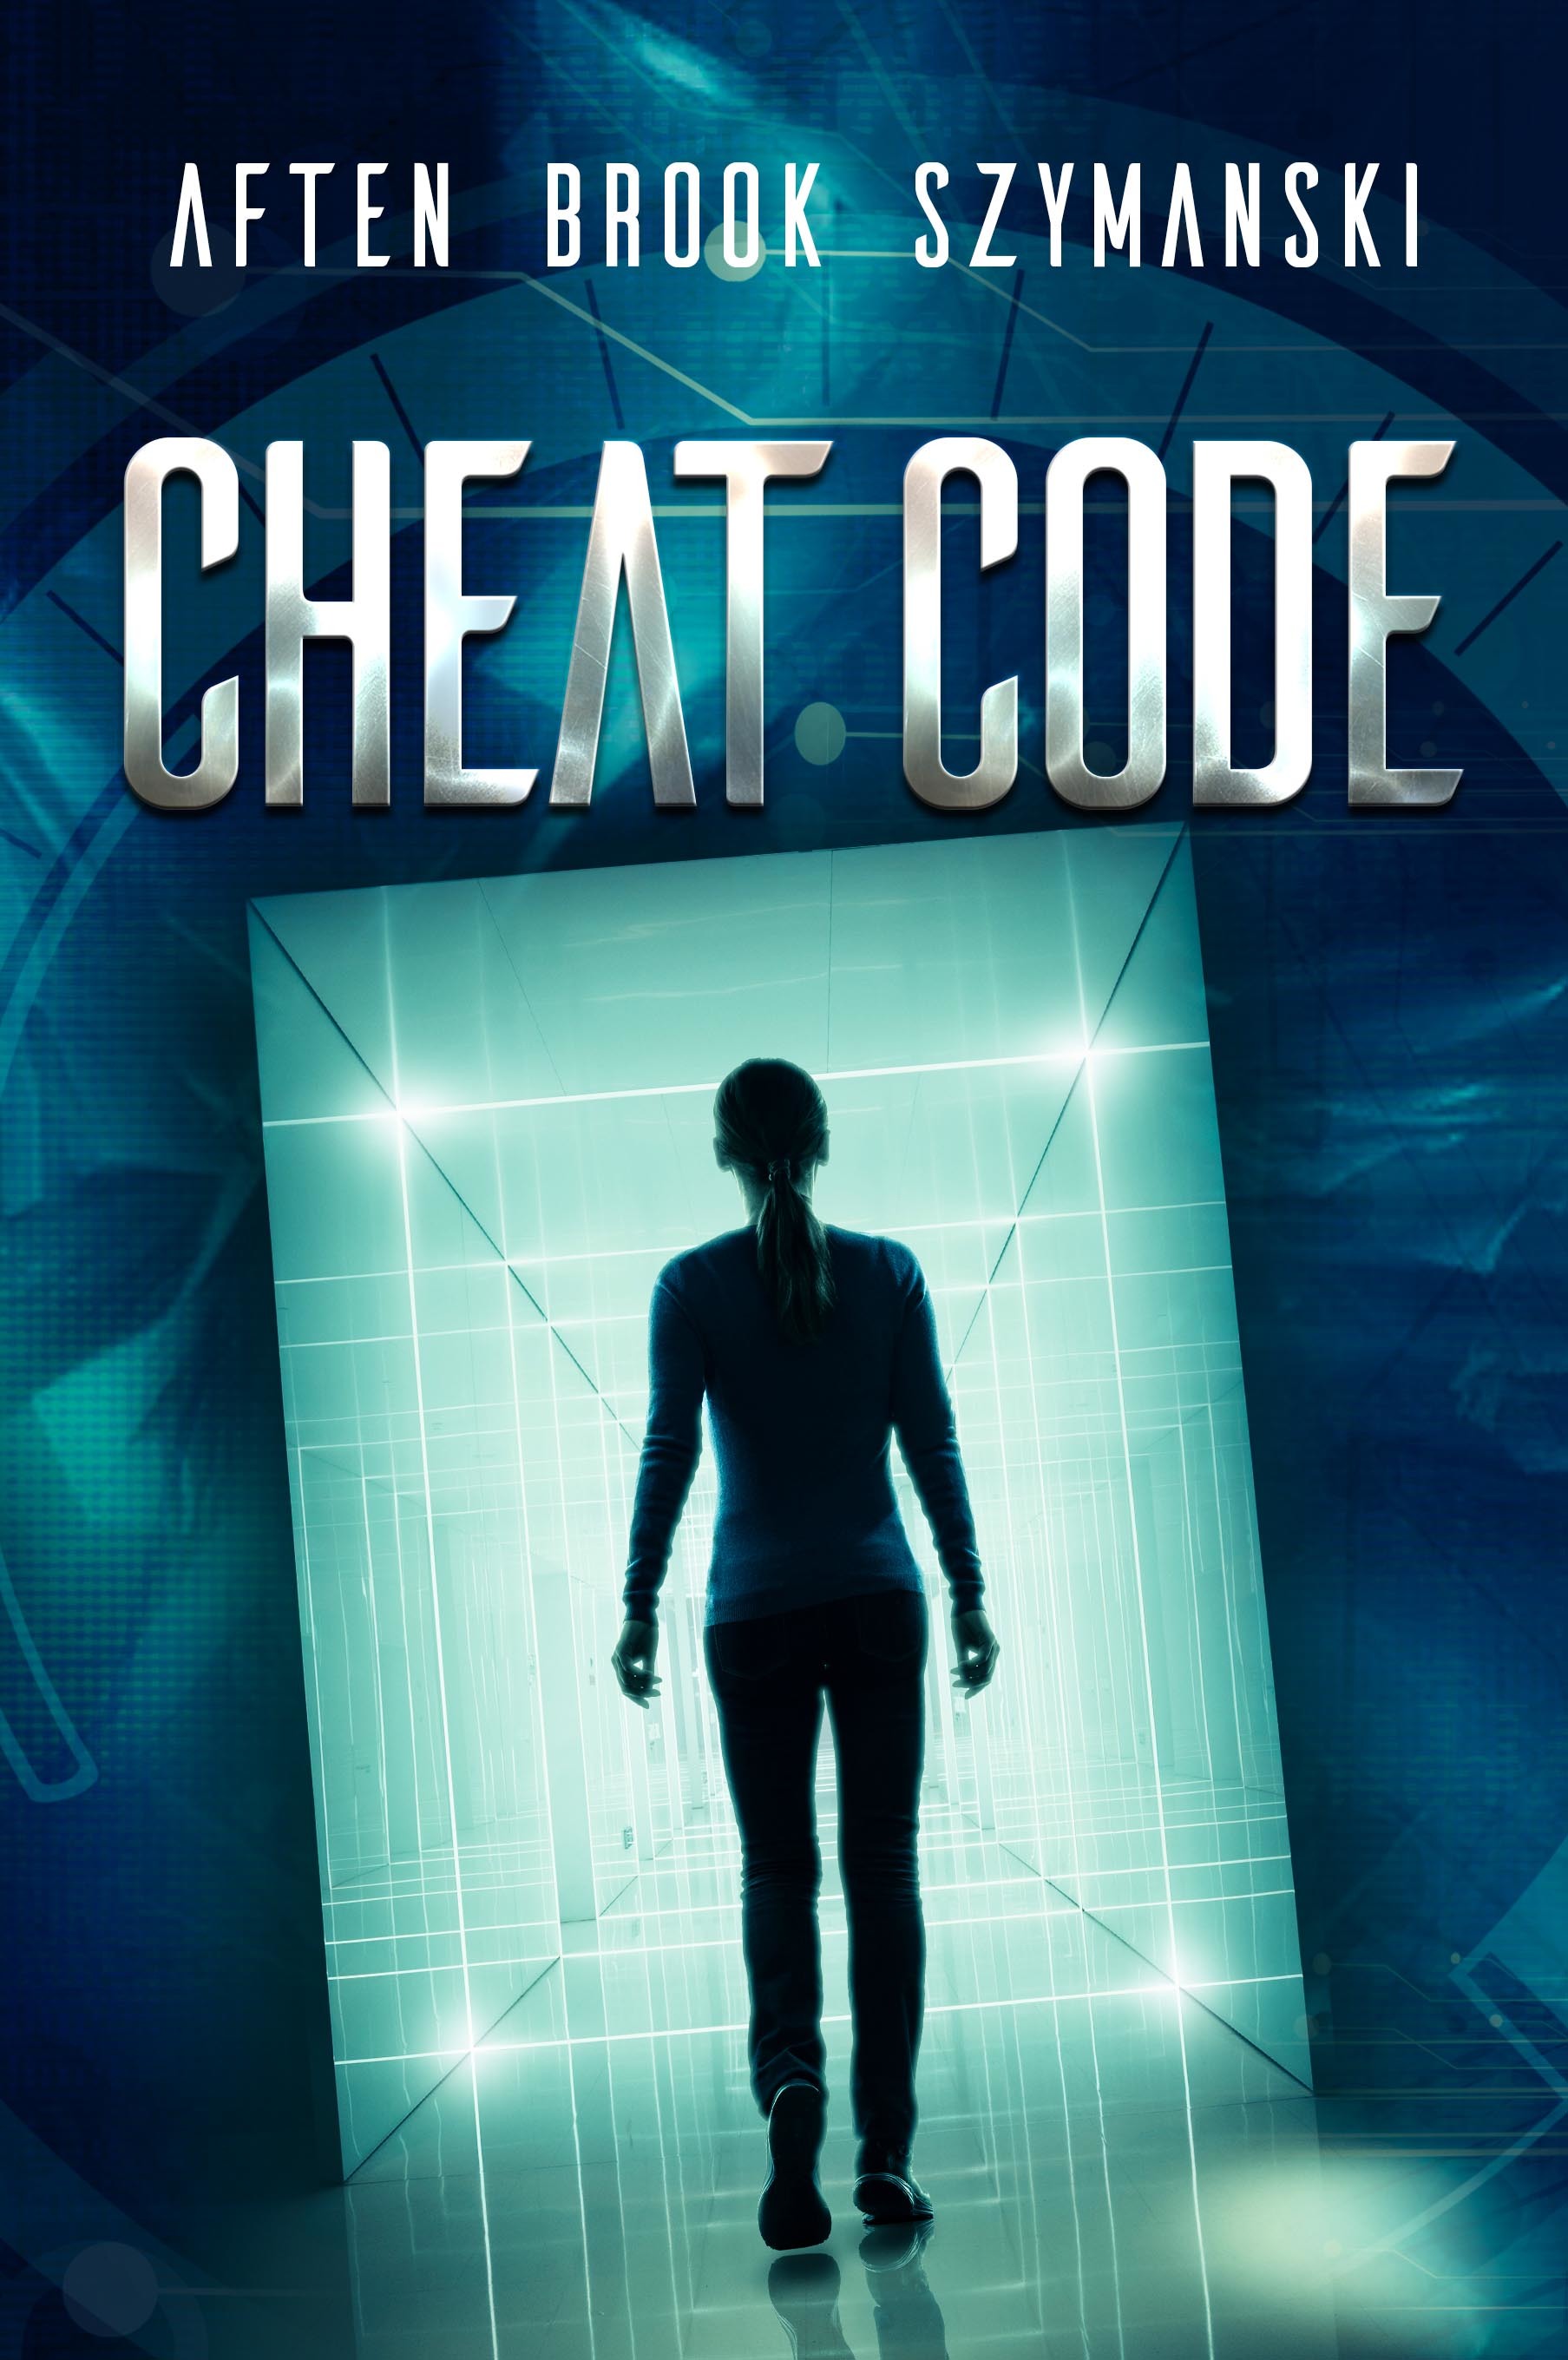 Aften Brook Szymanski: Cheat Code